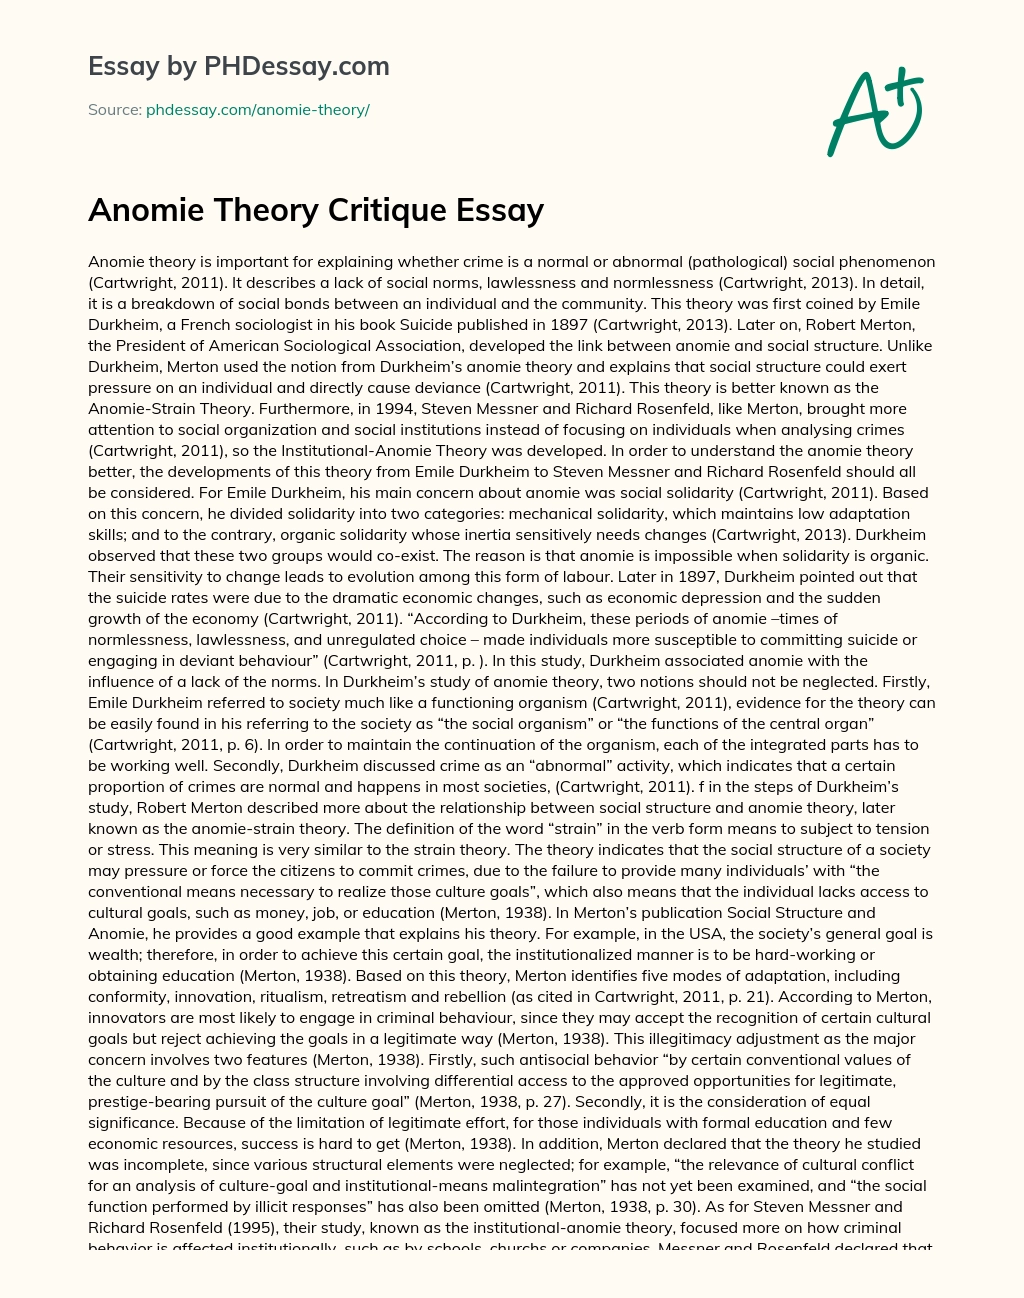 Anomie Theory Critique Essay essay